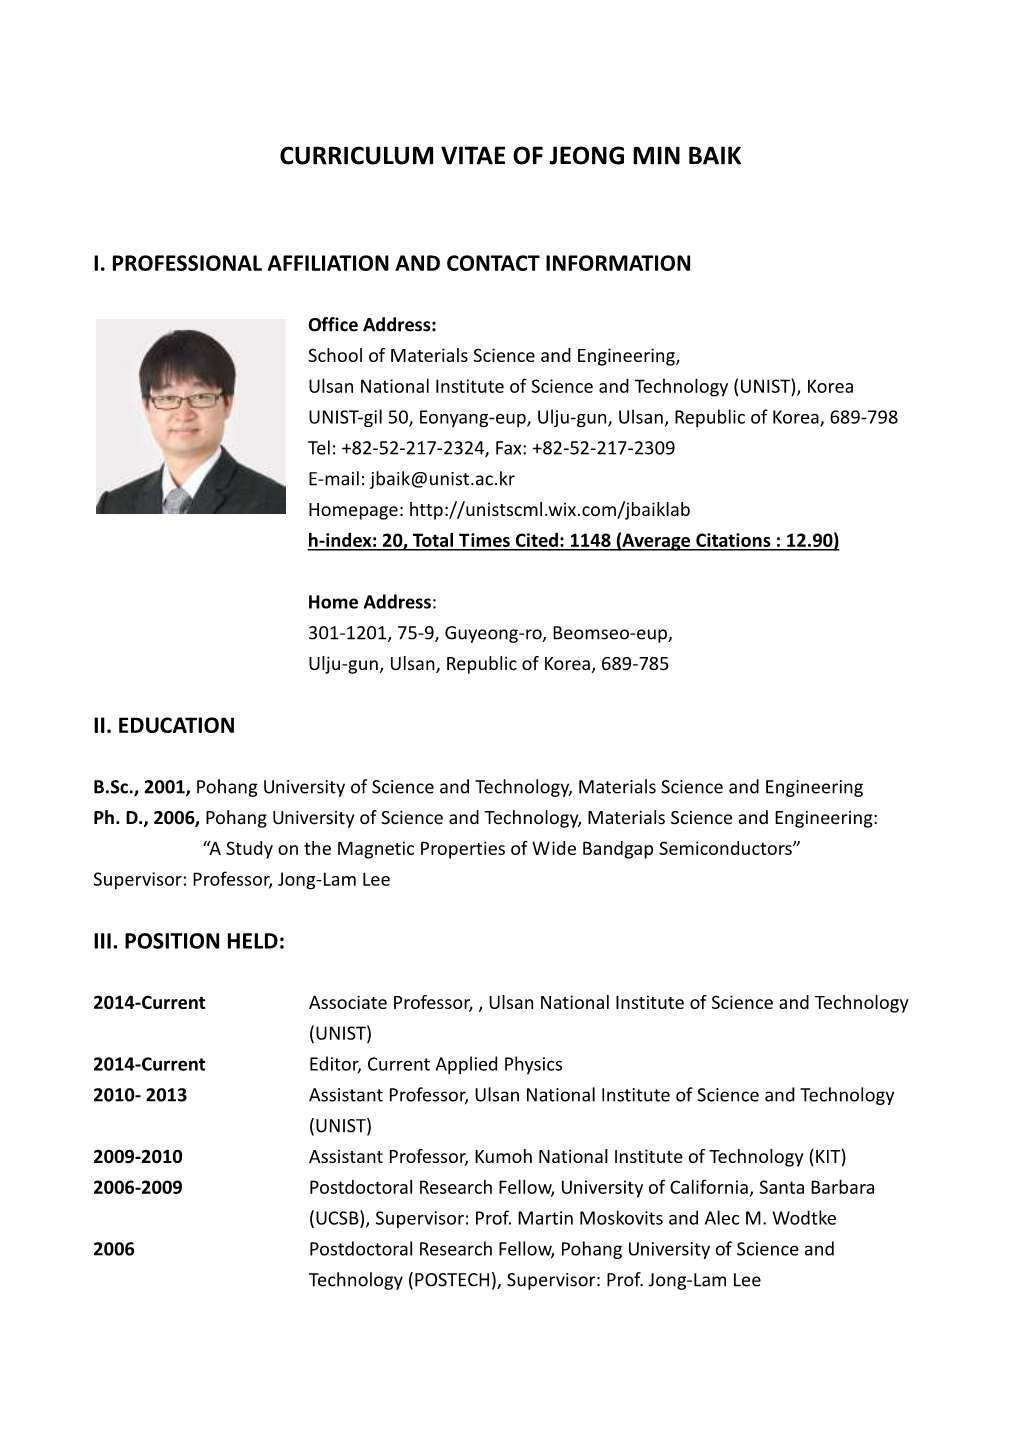 Curriculum Vitae of Jeong Min Baik